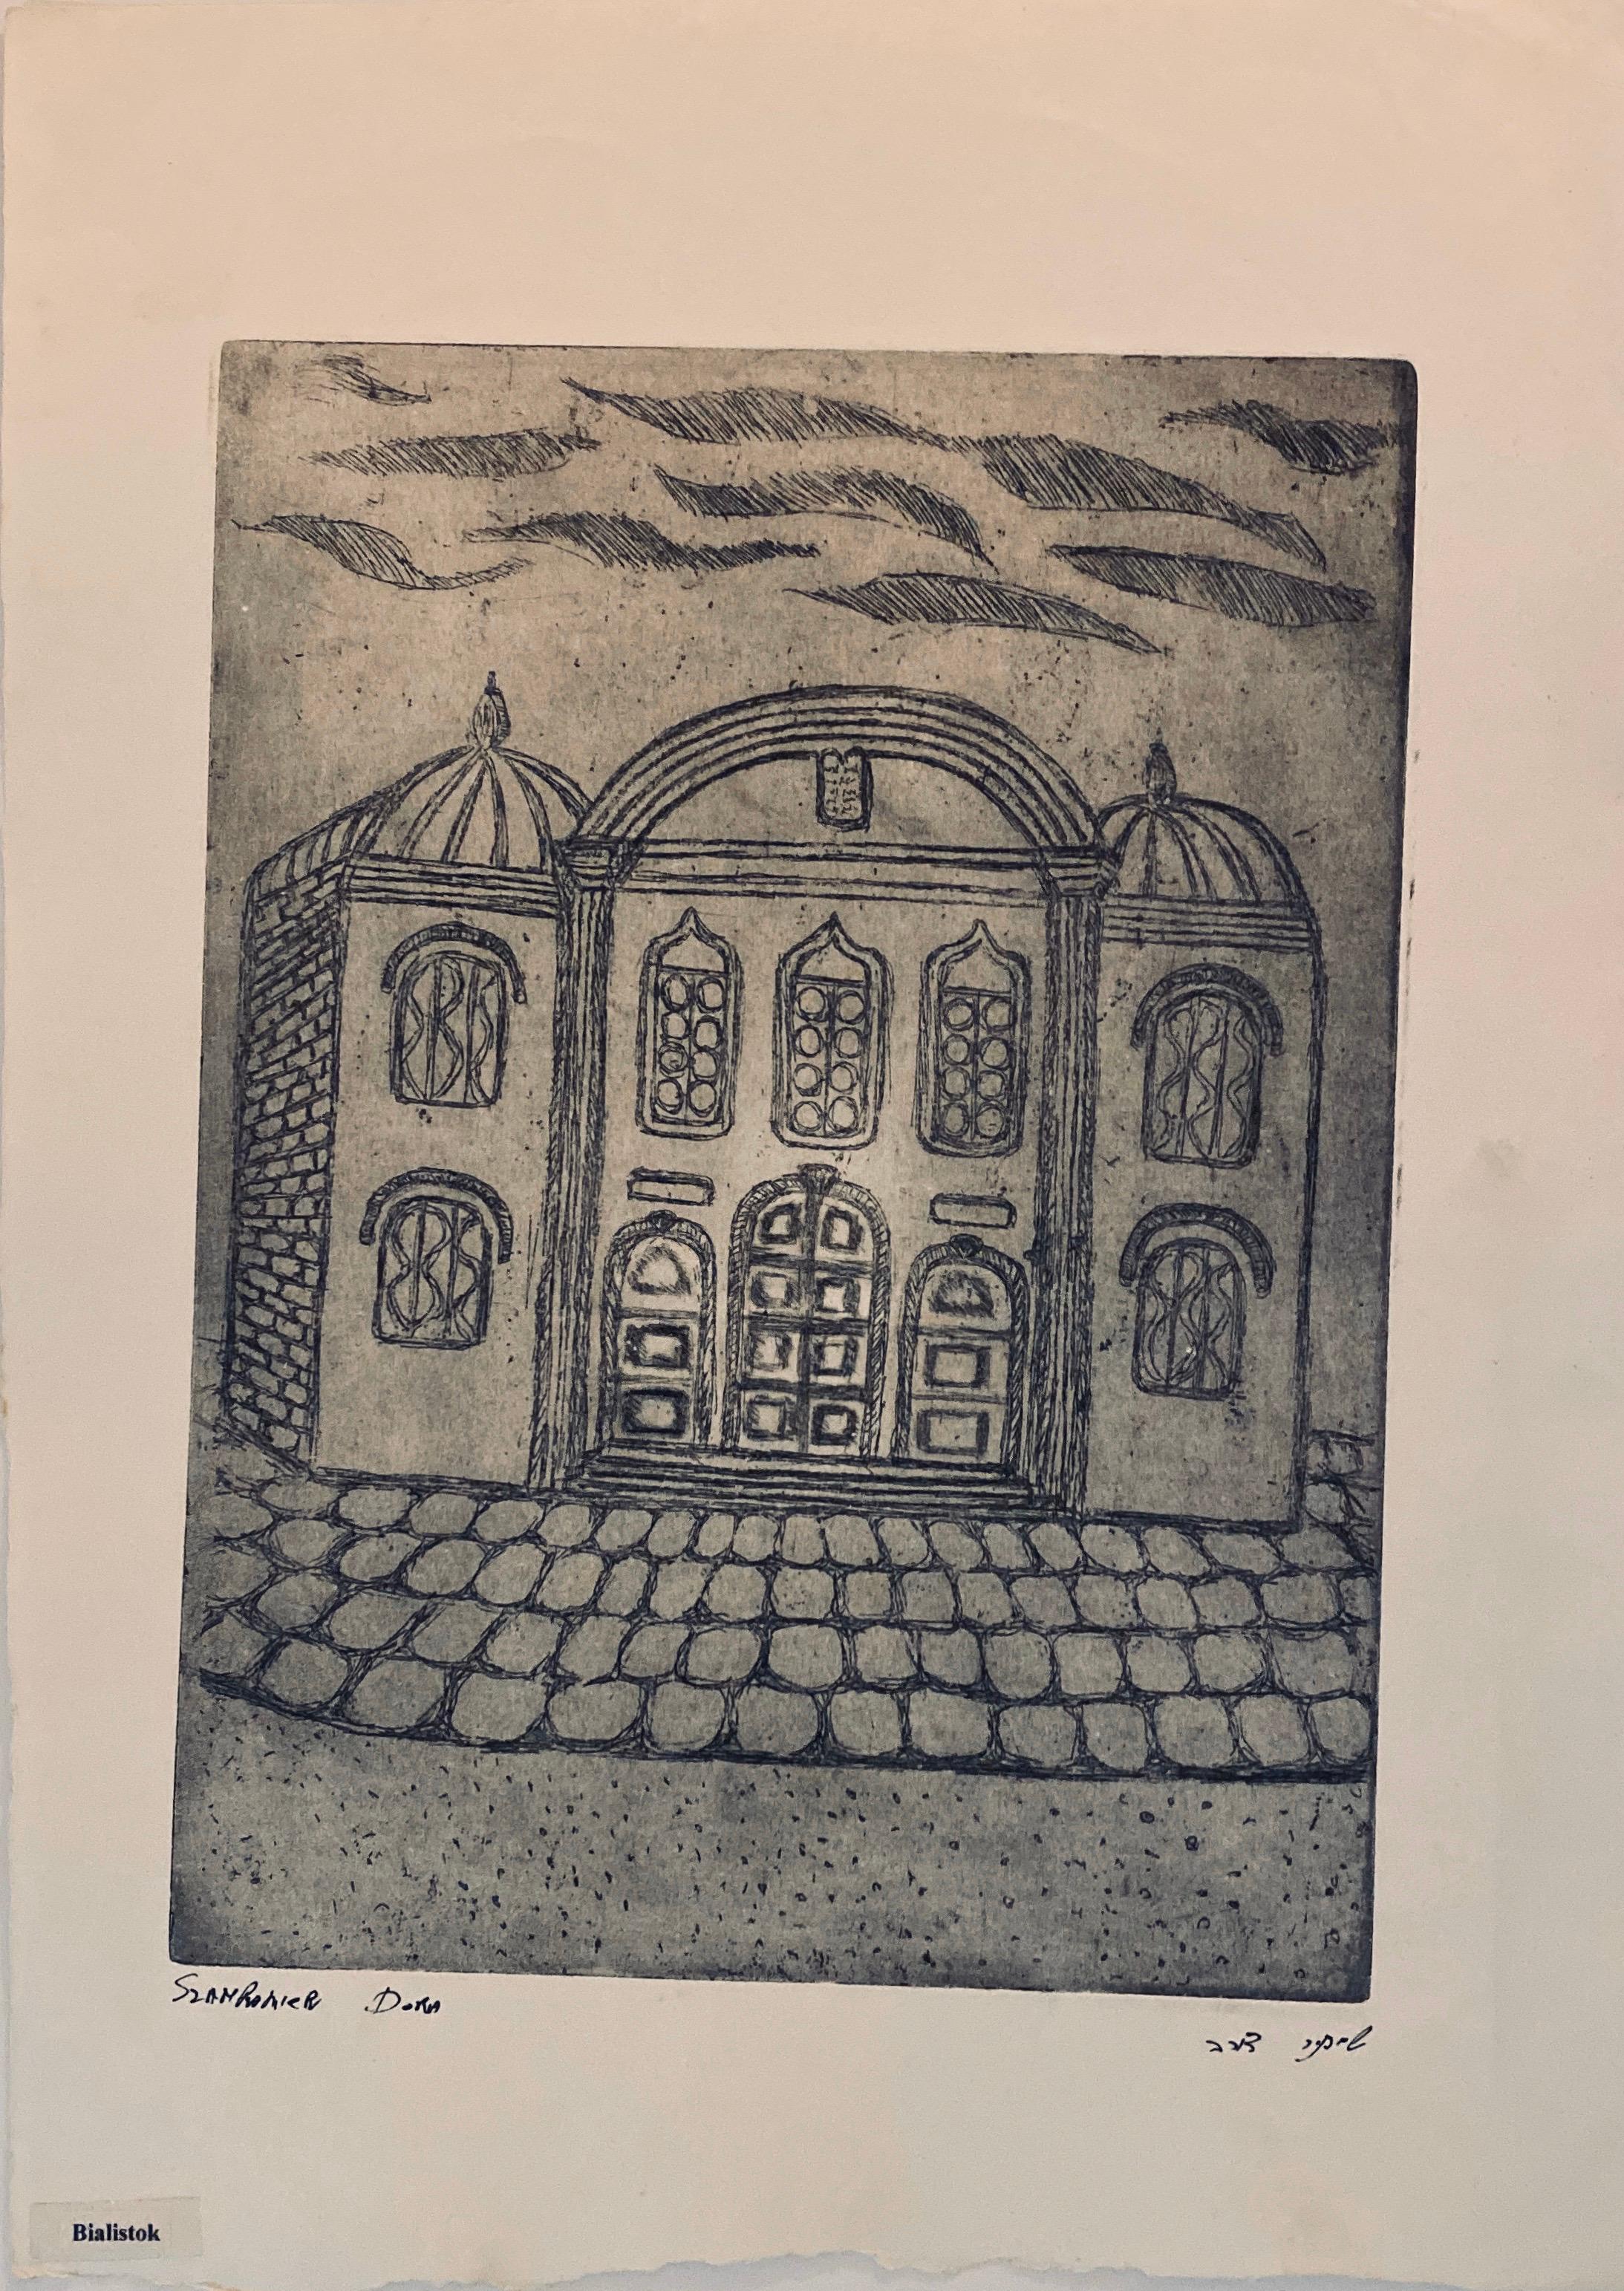 Etching of destroyed synagogue - Bialistok, Poland  - Print by Dora Szampanier